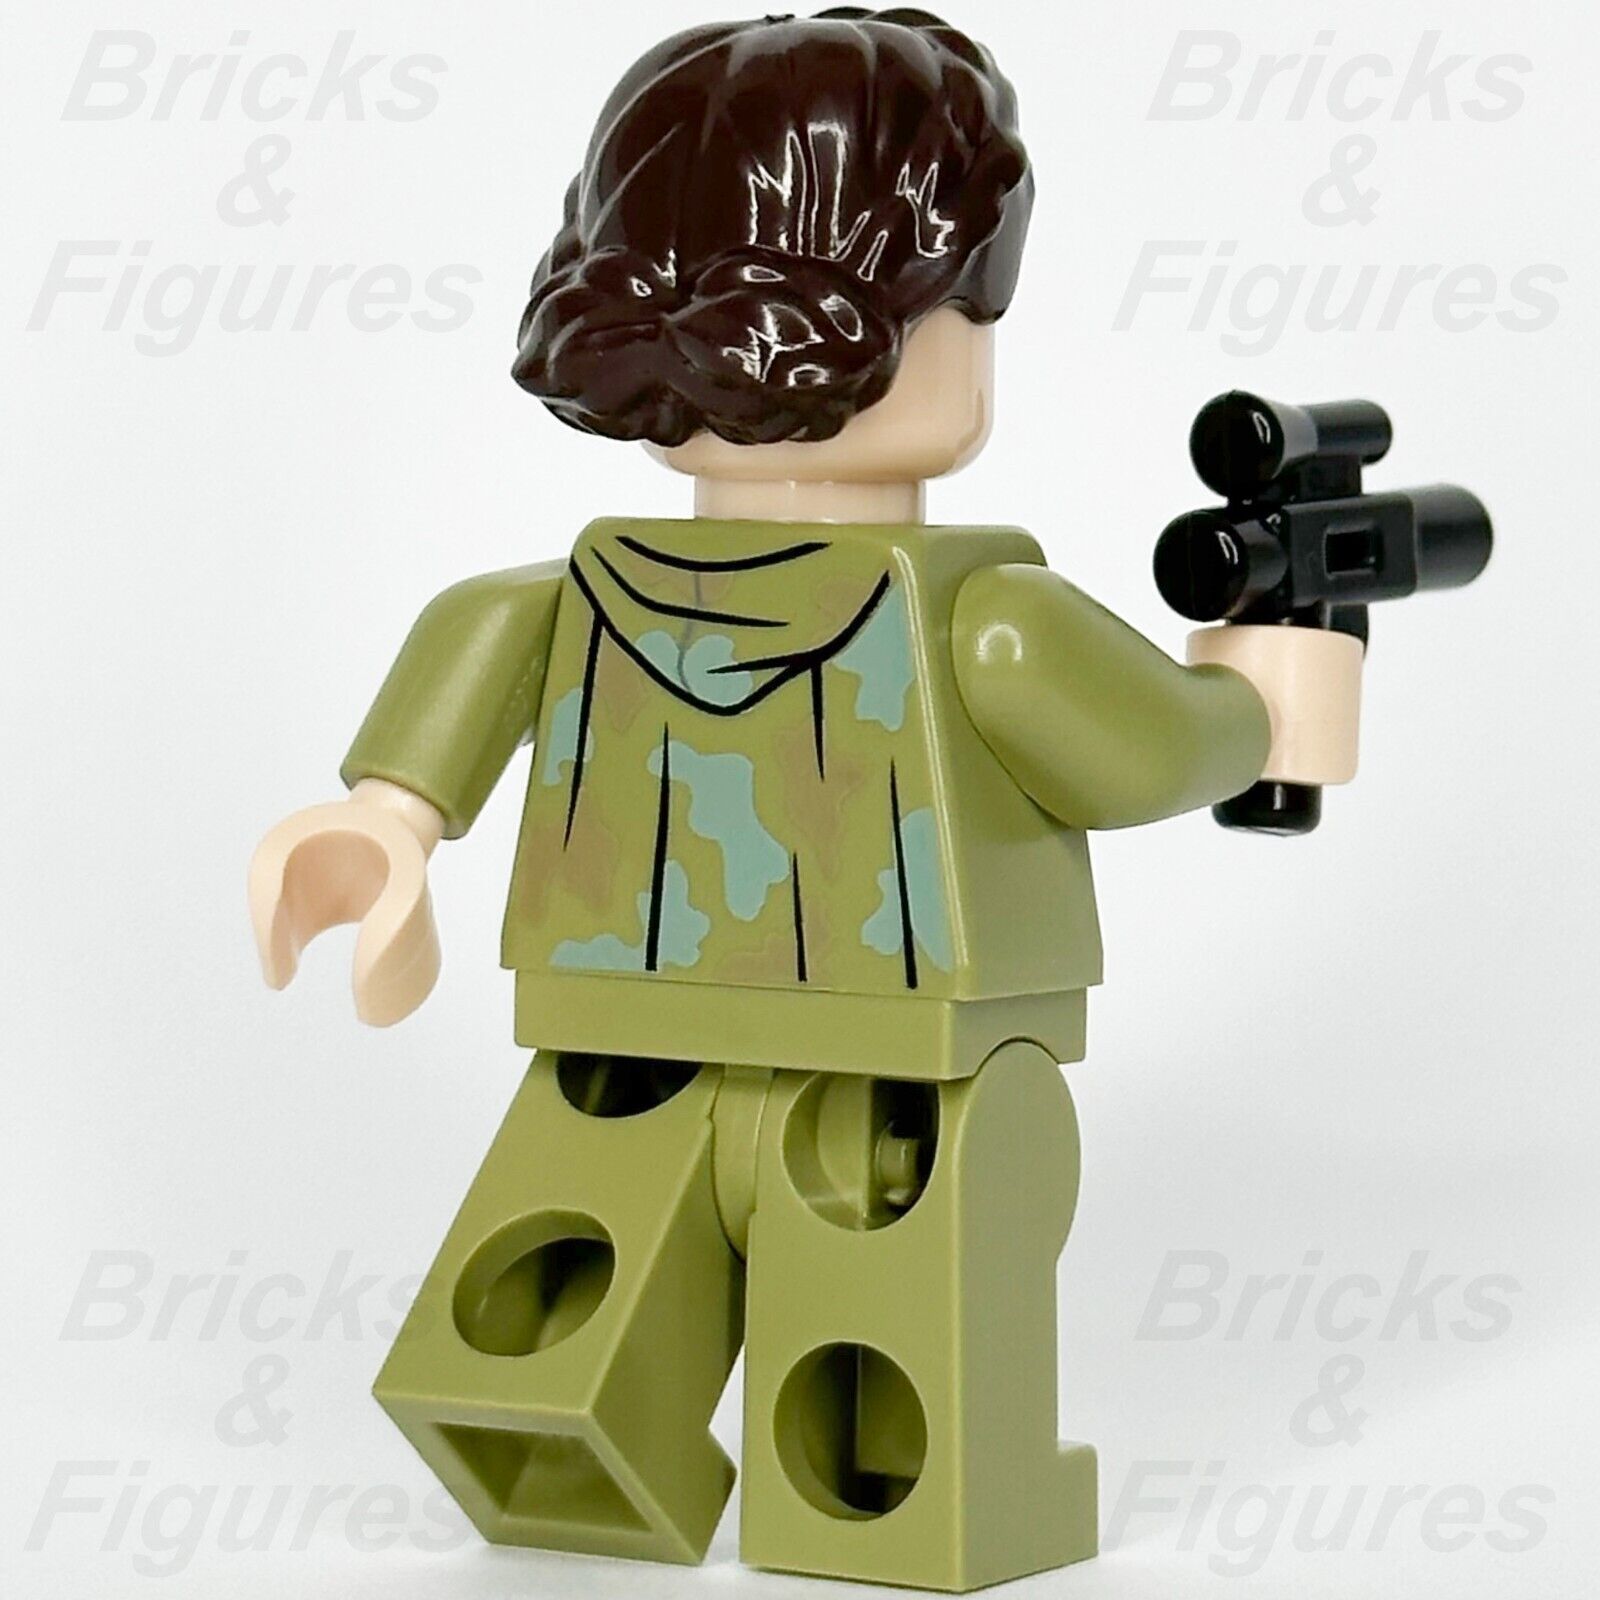 LEGO Star Wars Princess Leia Minifigure Olive Green Endor Outfit 75366 sw1296 3